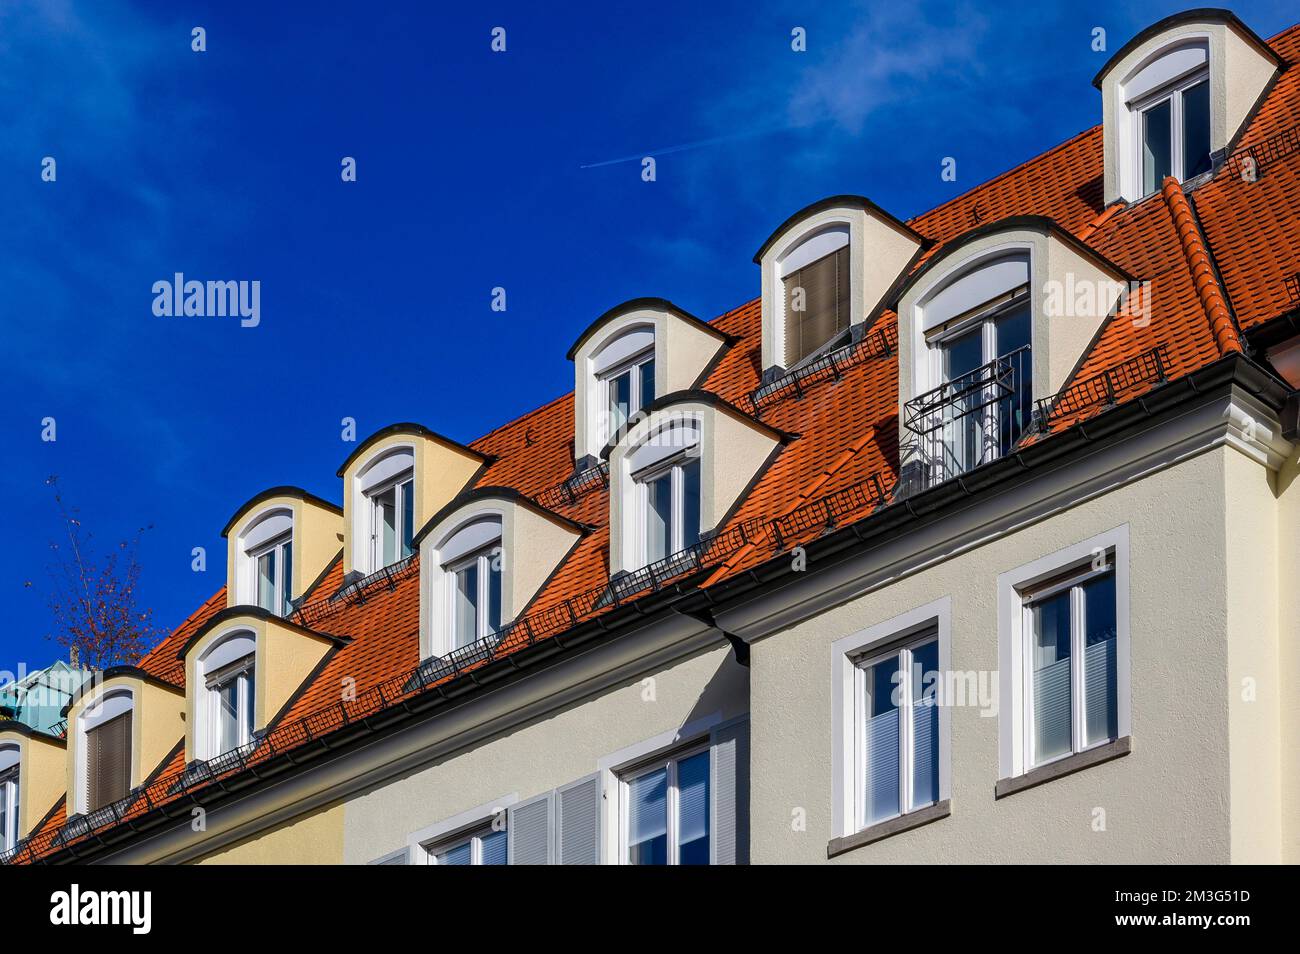 House roof with dormers, Bahnhofstrasse, Kempten, Allgaeu, Bavaria, Germany Stock Photo